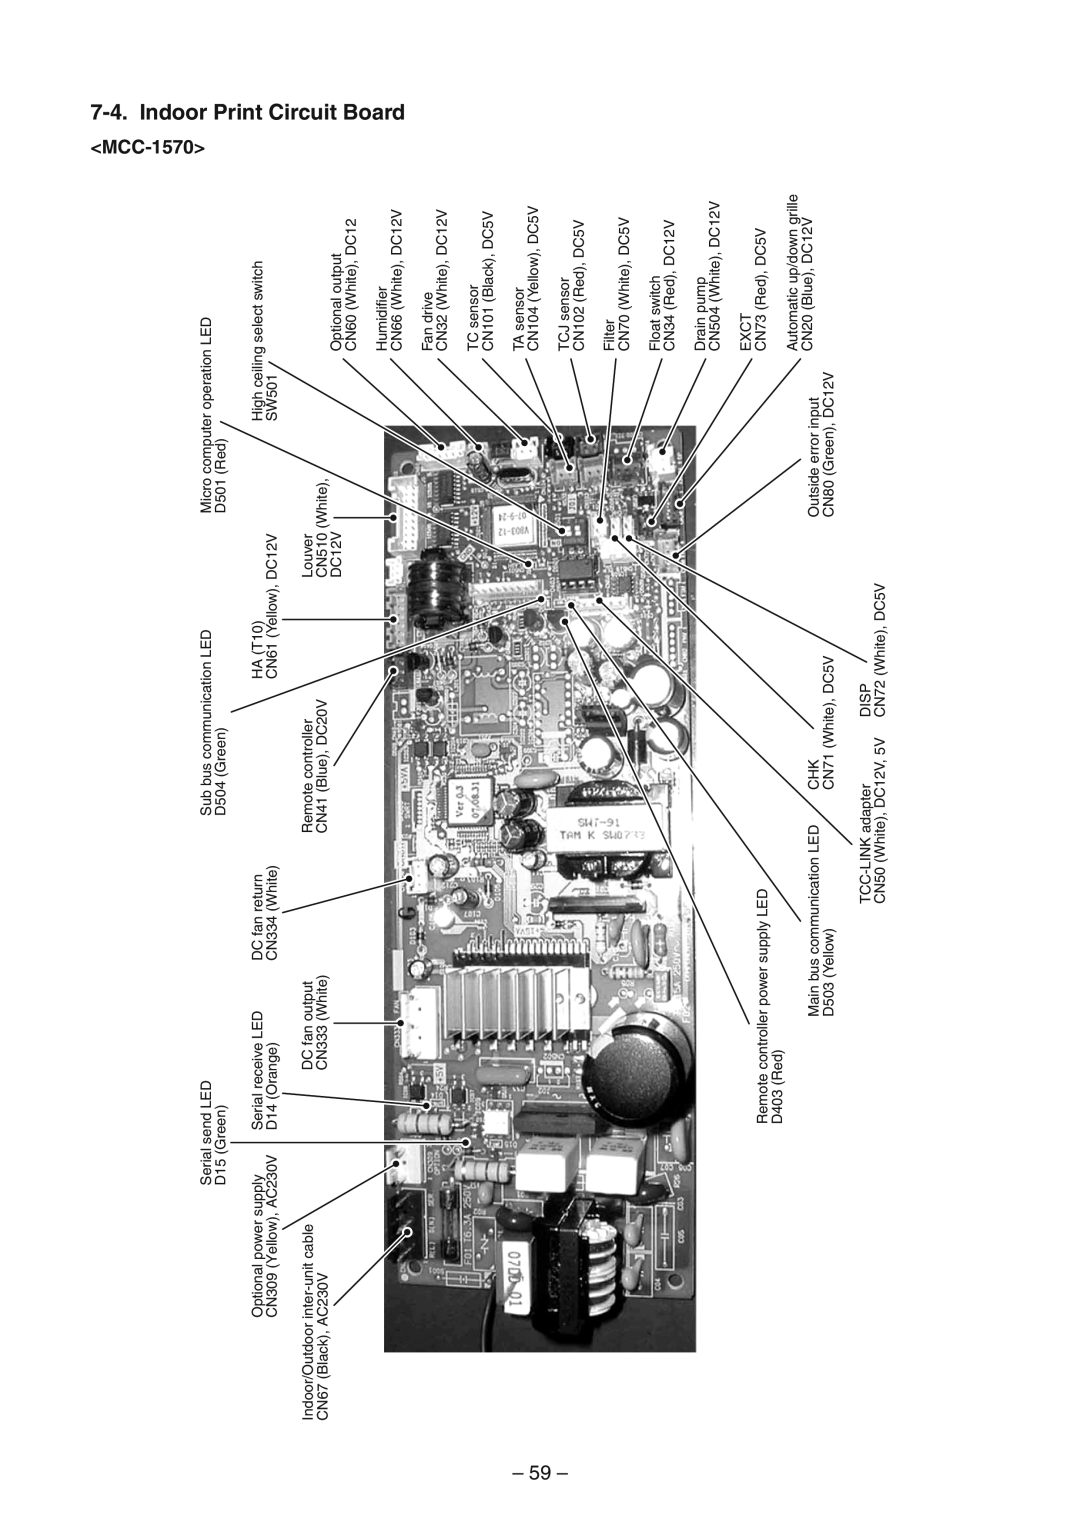 Toshiba RAV-SM804UT-E, RAV-SM1404UT-E, RAV-SM1104UT-E, RAV-SP1104AT-E Indoor, Print Circuit Board, 59, <MCC-1570> 